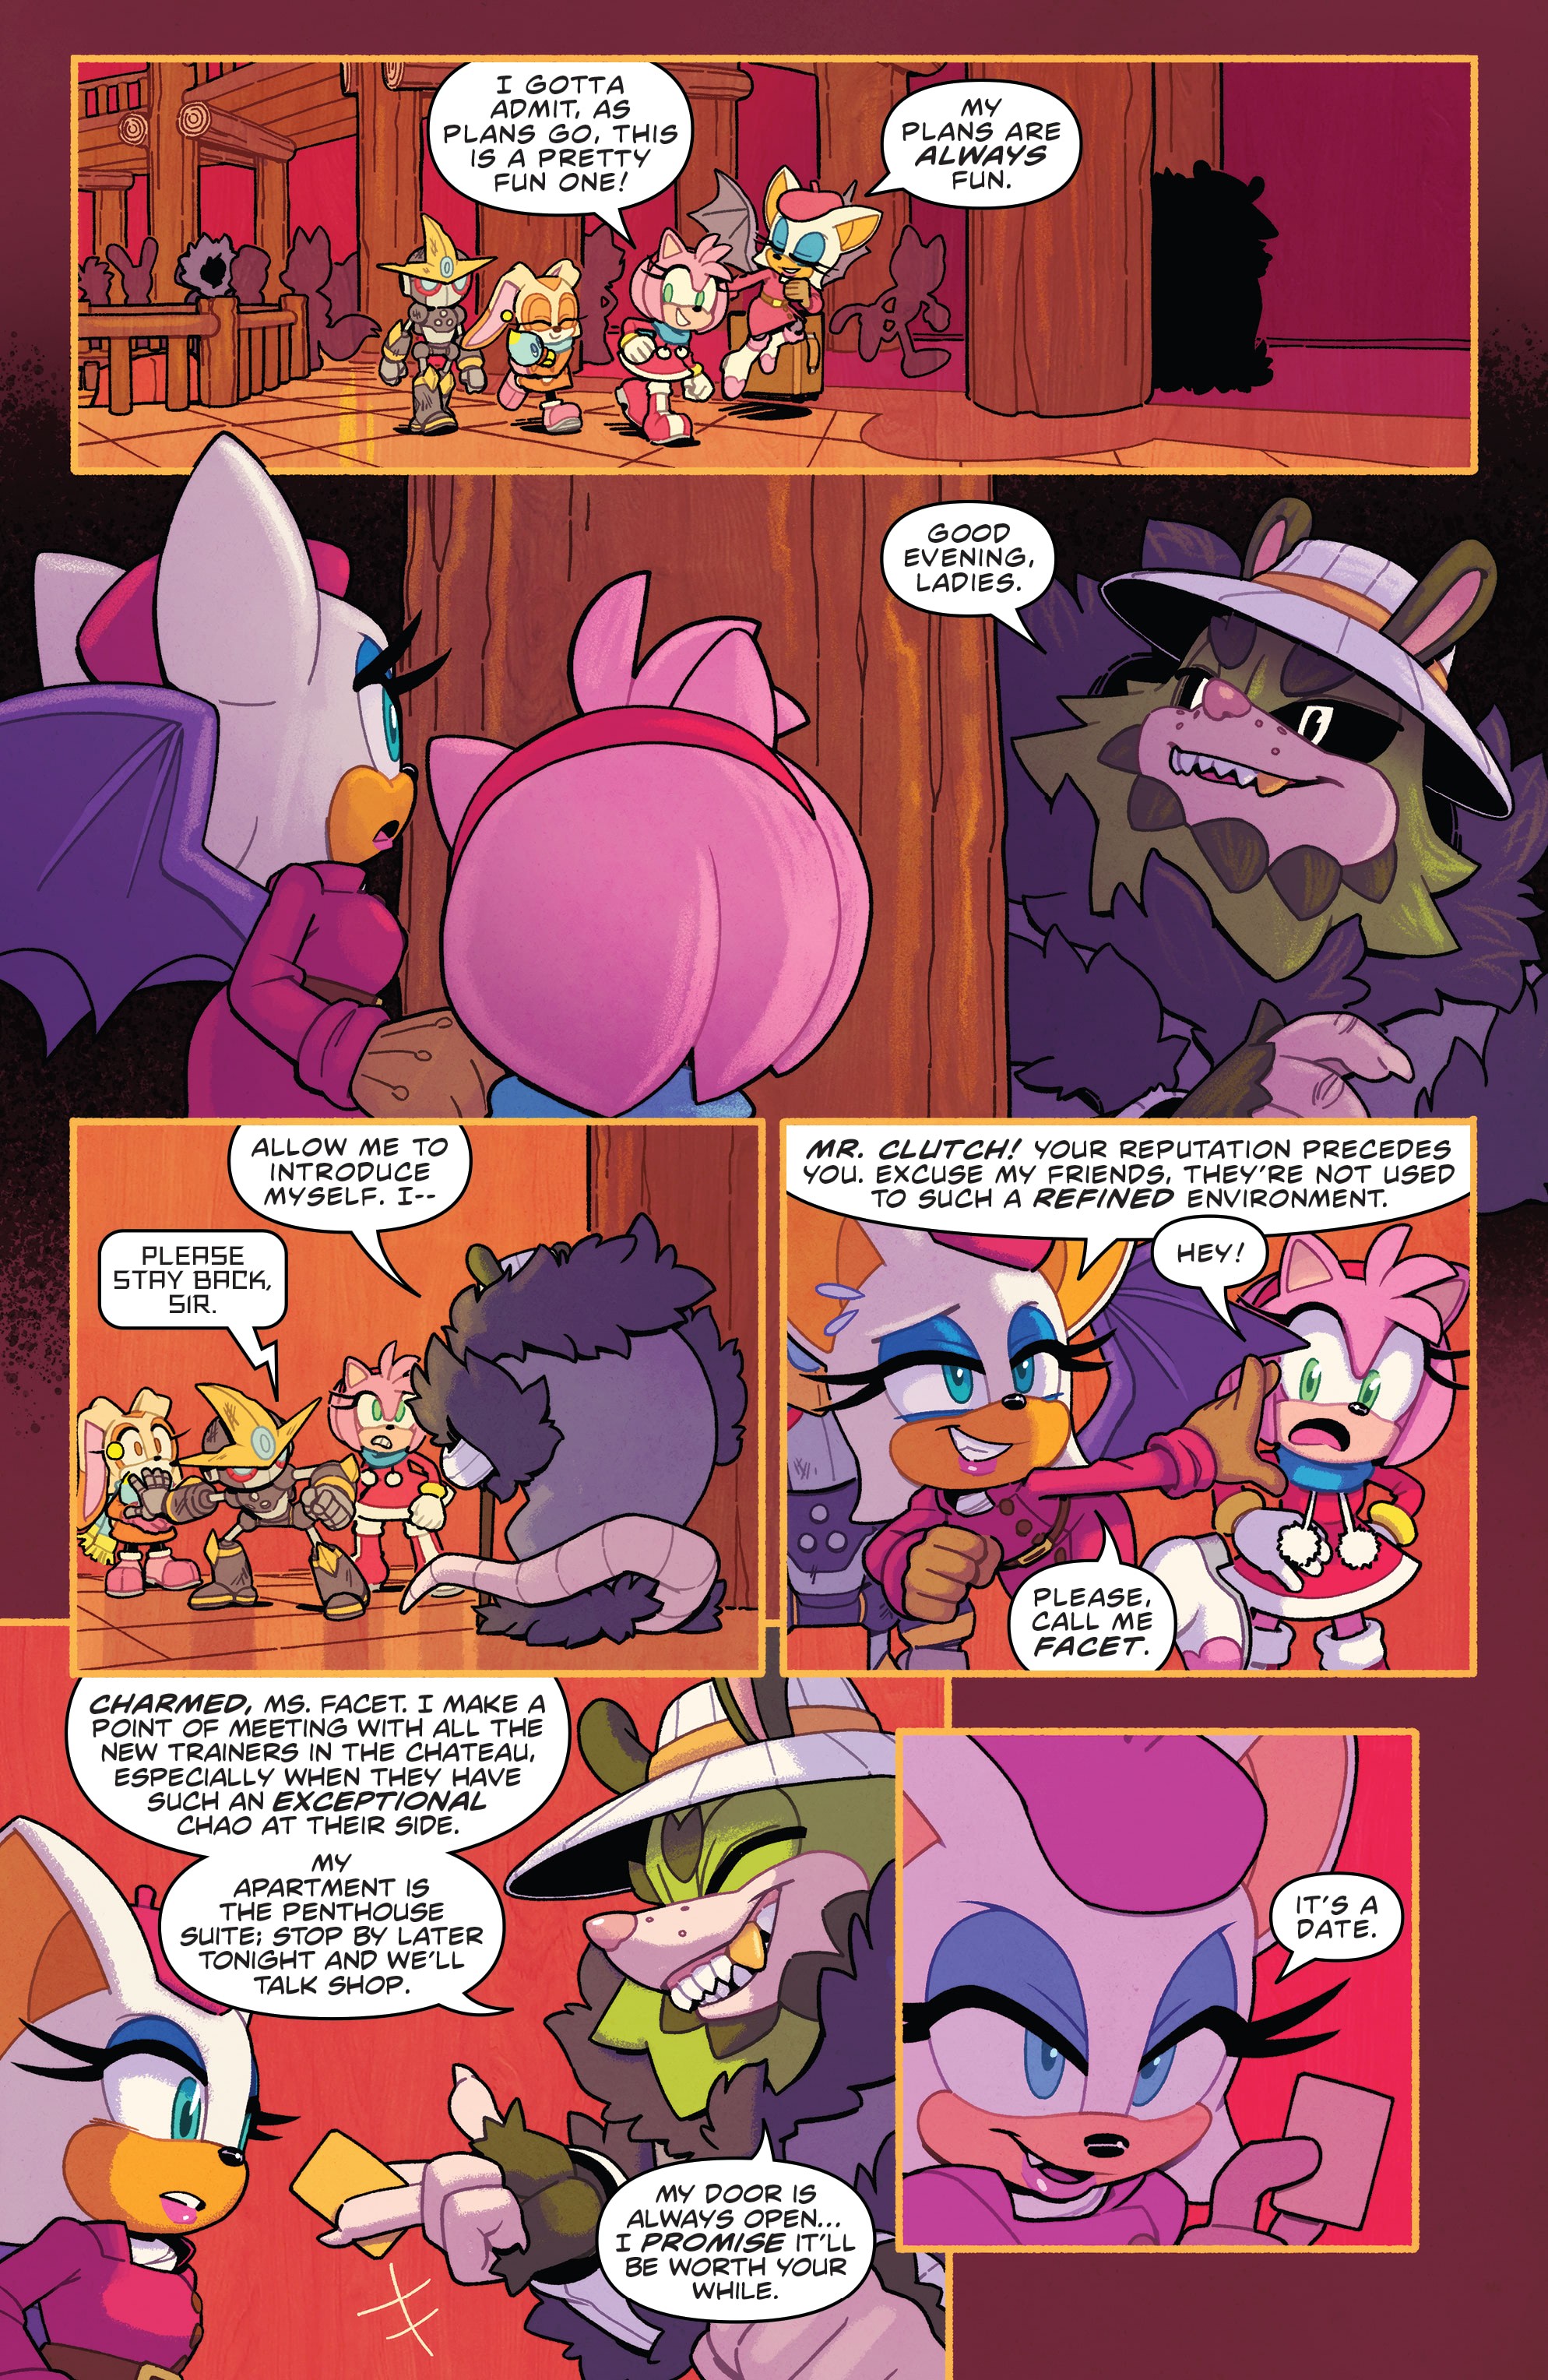 Sonic the Comic #33 VG ; Fleetway Quality